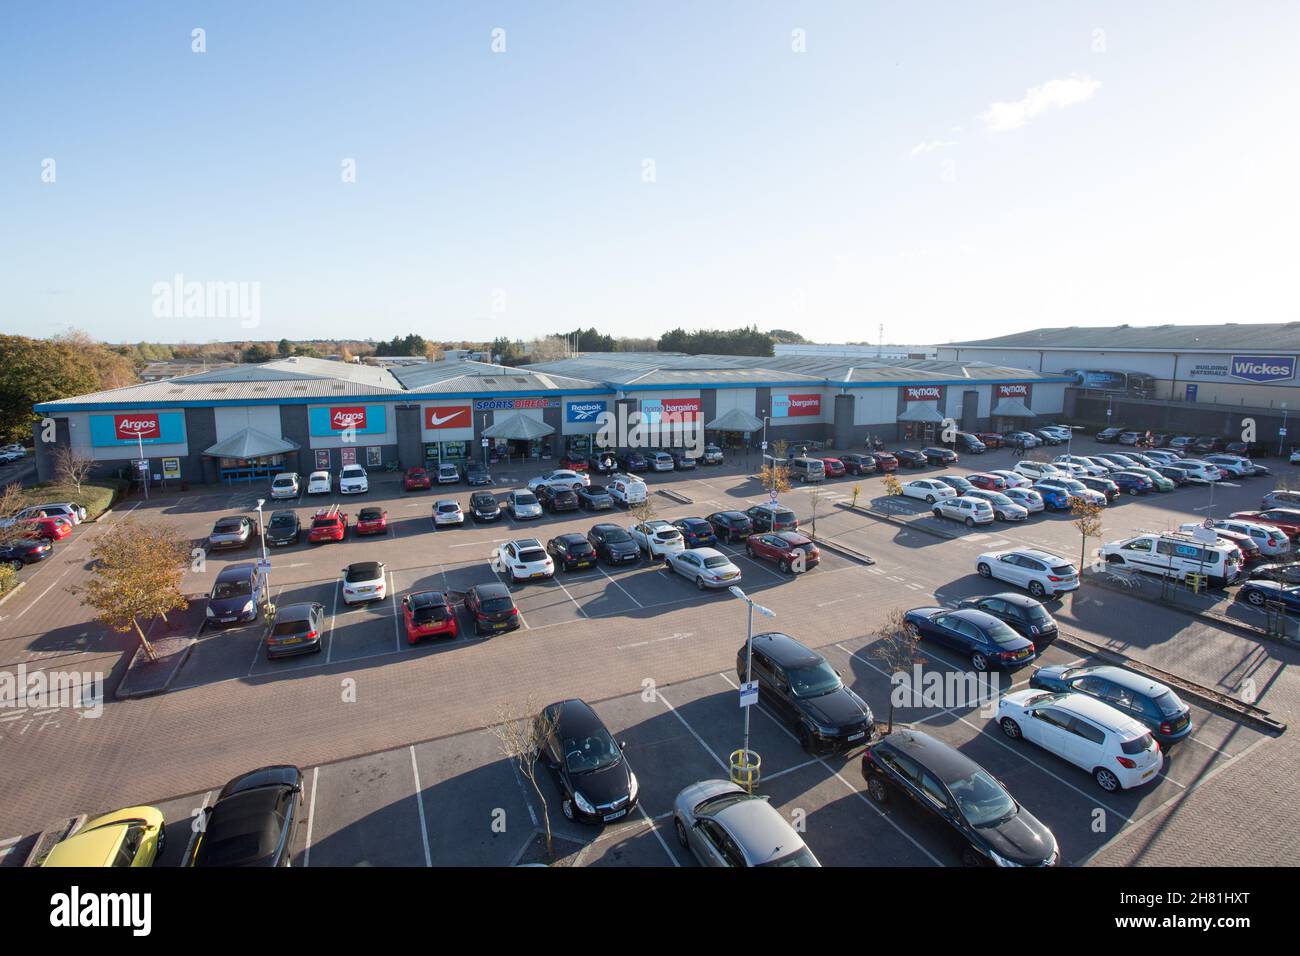 Ringwood Road Retail Park, Ringwood, Bournemouth Banque D'Images